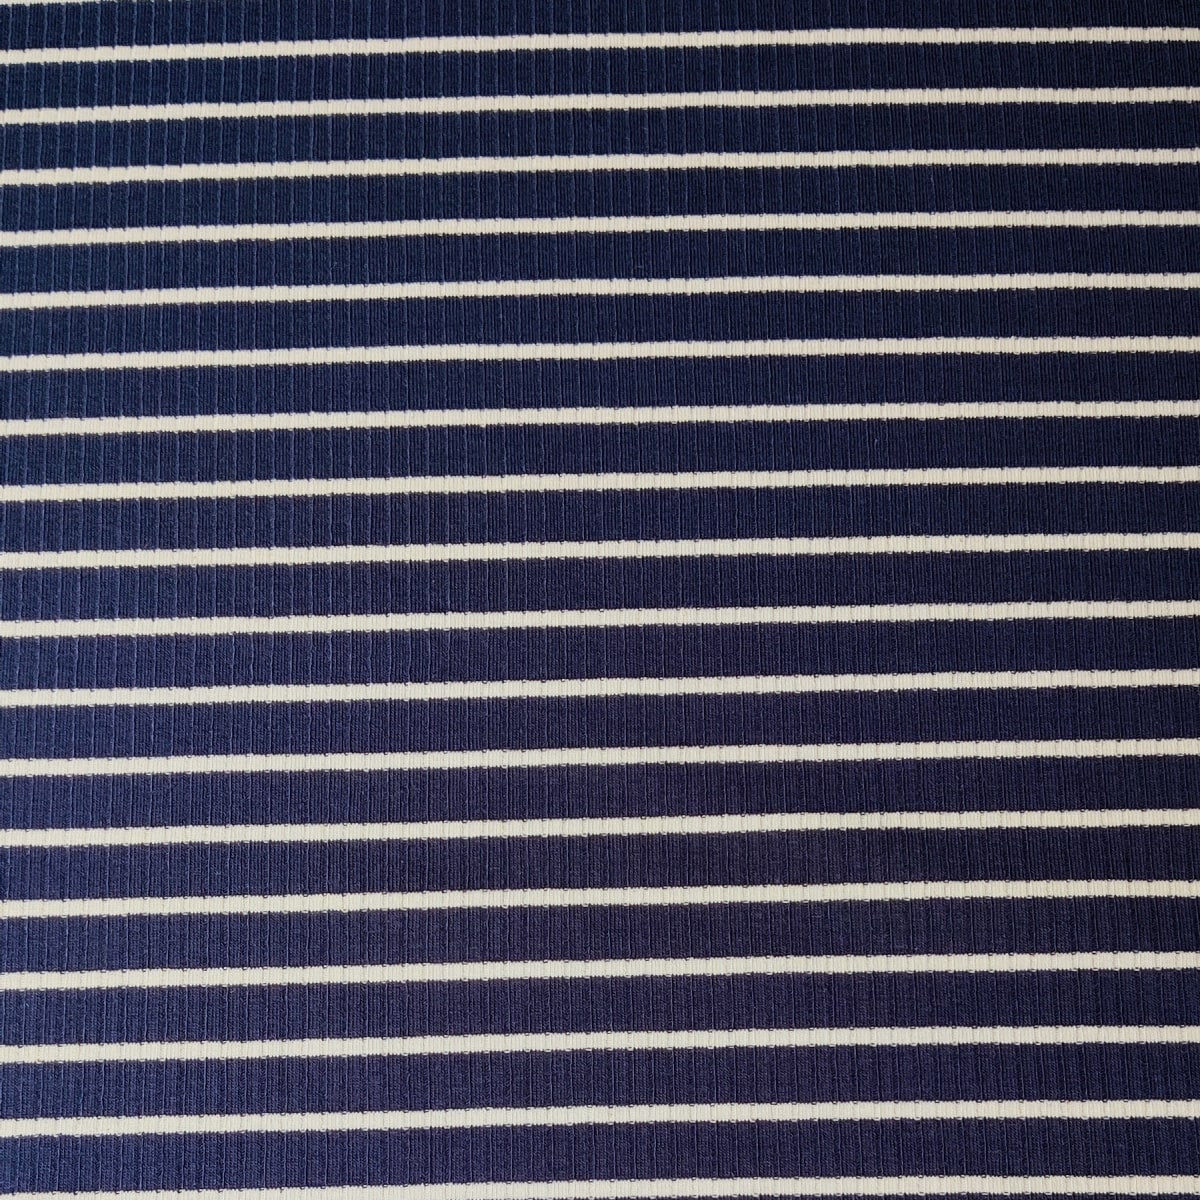 Rib Knit Jersey Fabric - Navy Stipes